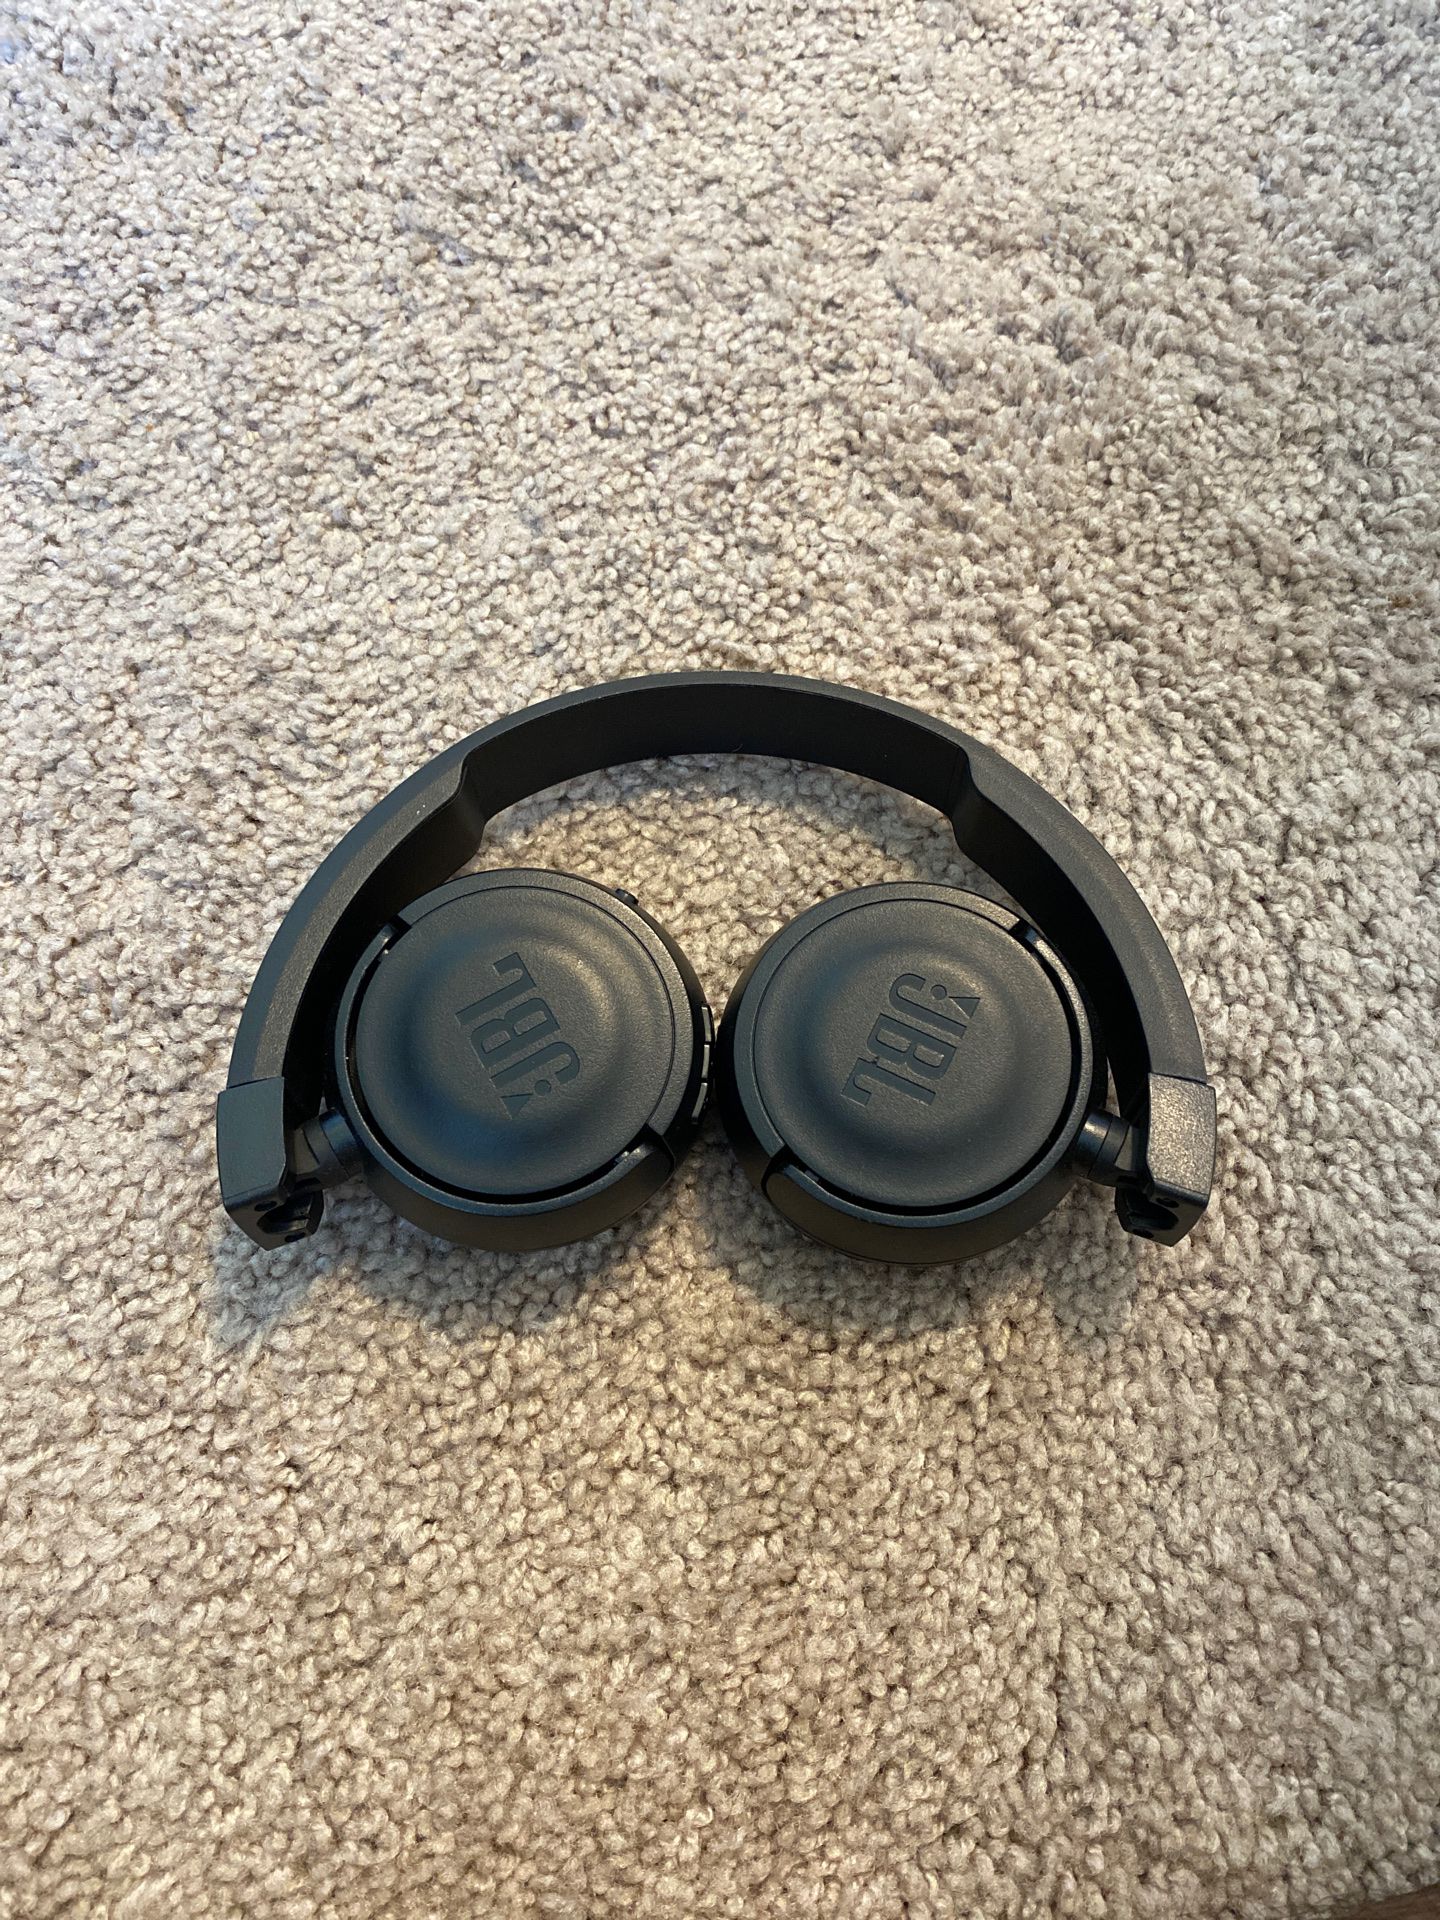 JBL wireless bluetooth headphones